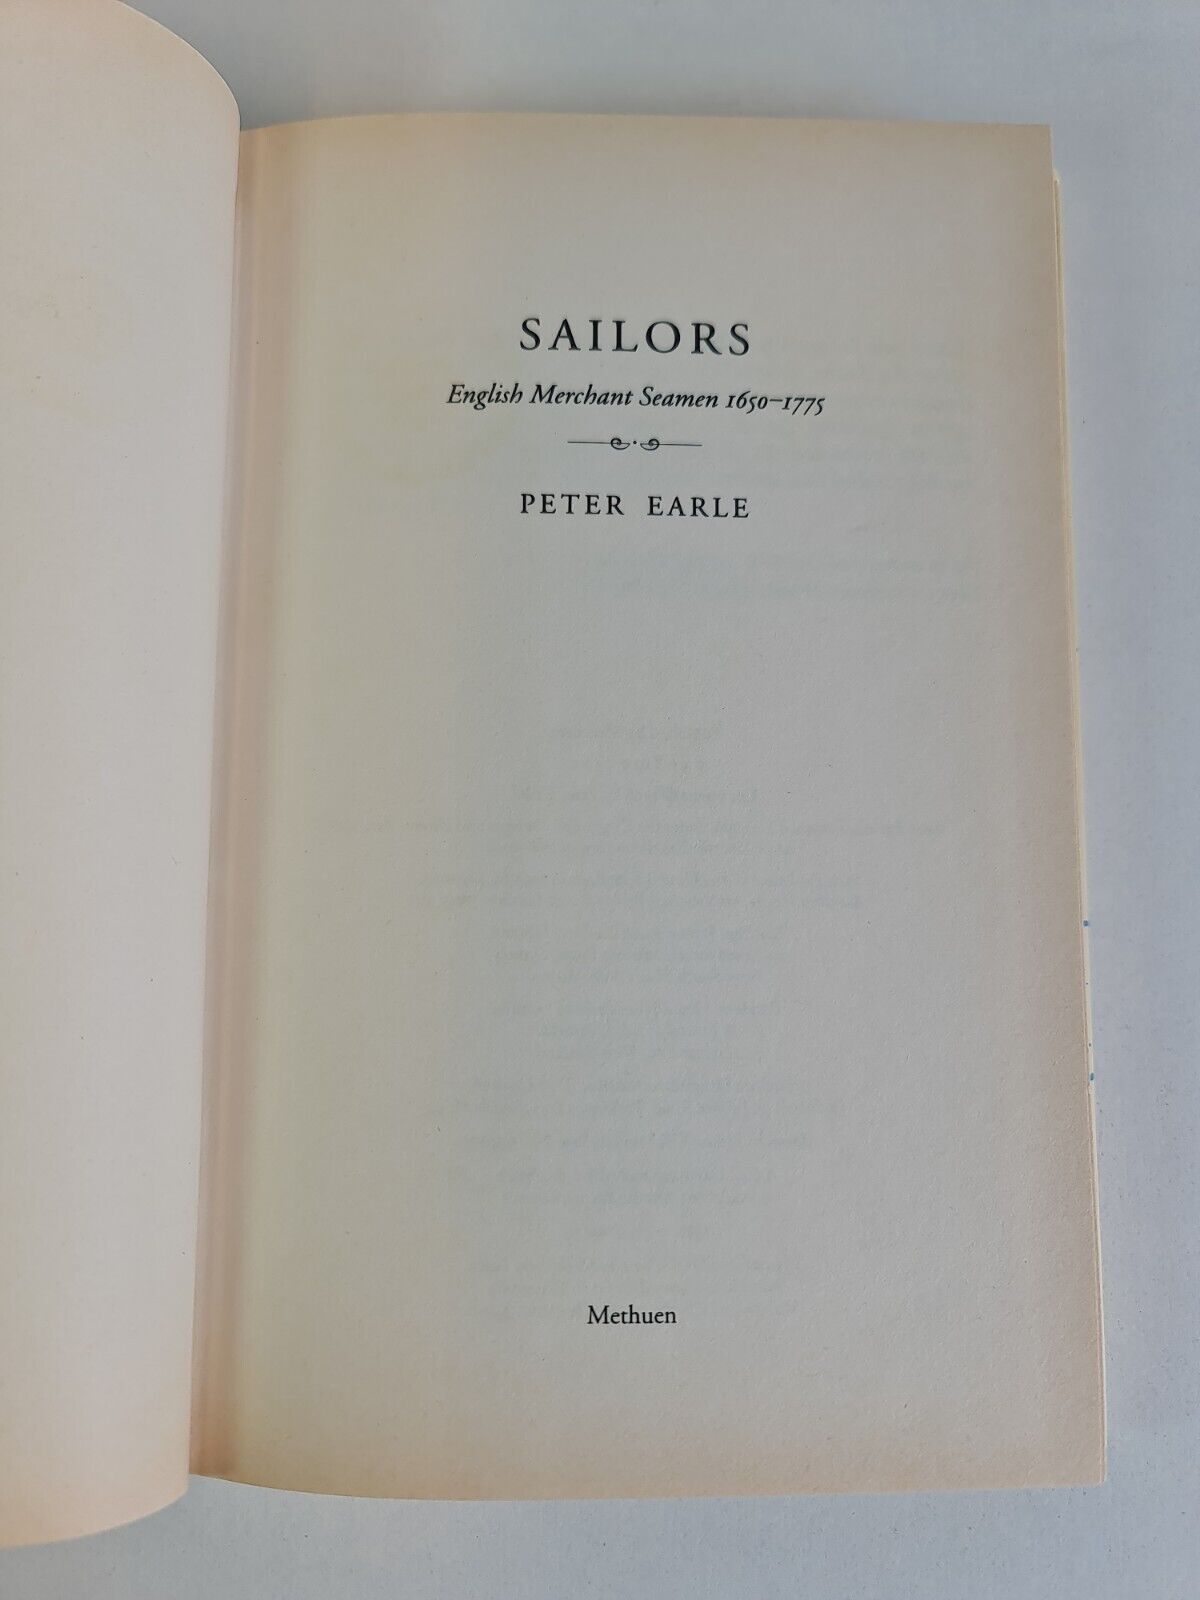 Sailors: English Merchant Seamen, 1600-1750 by Peter Earle